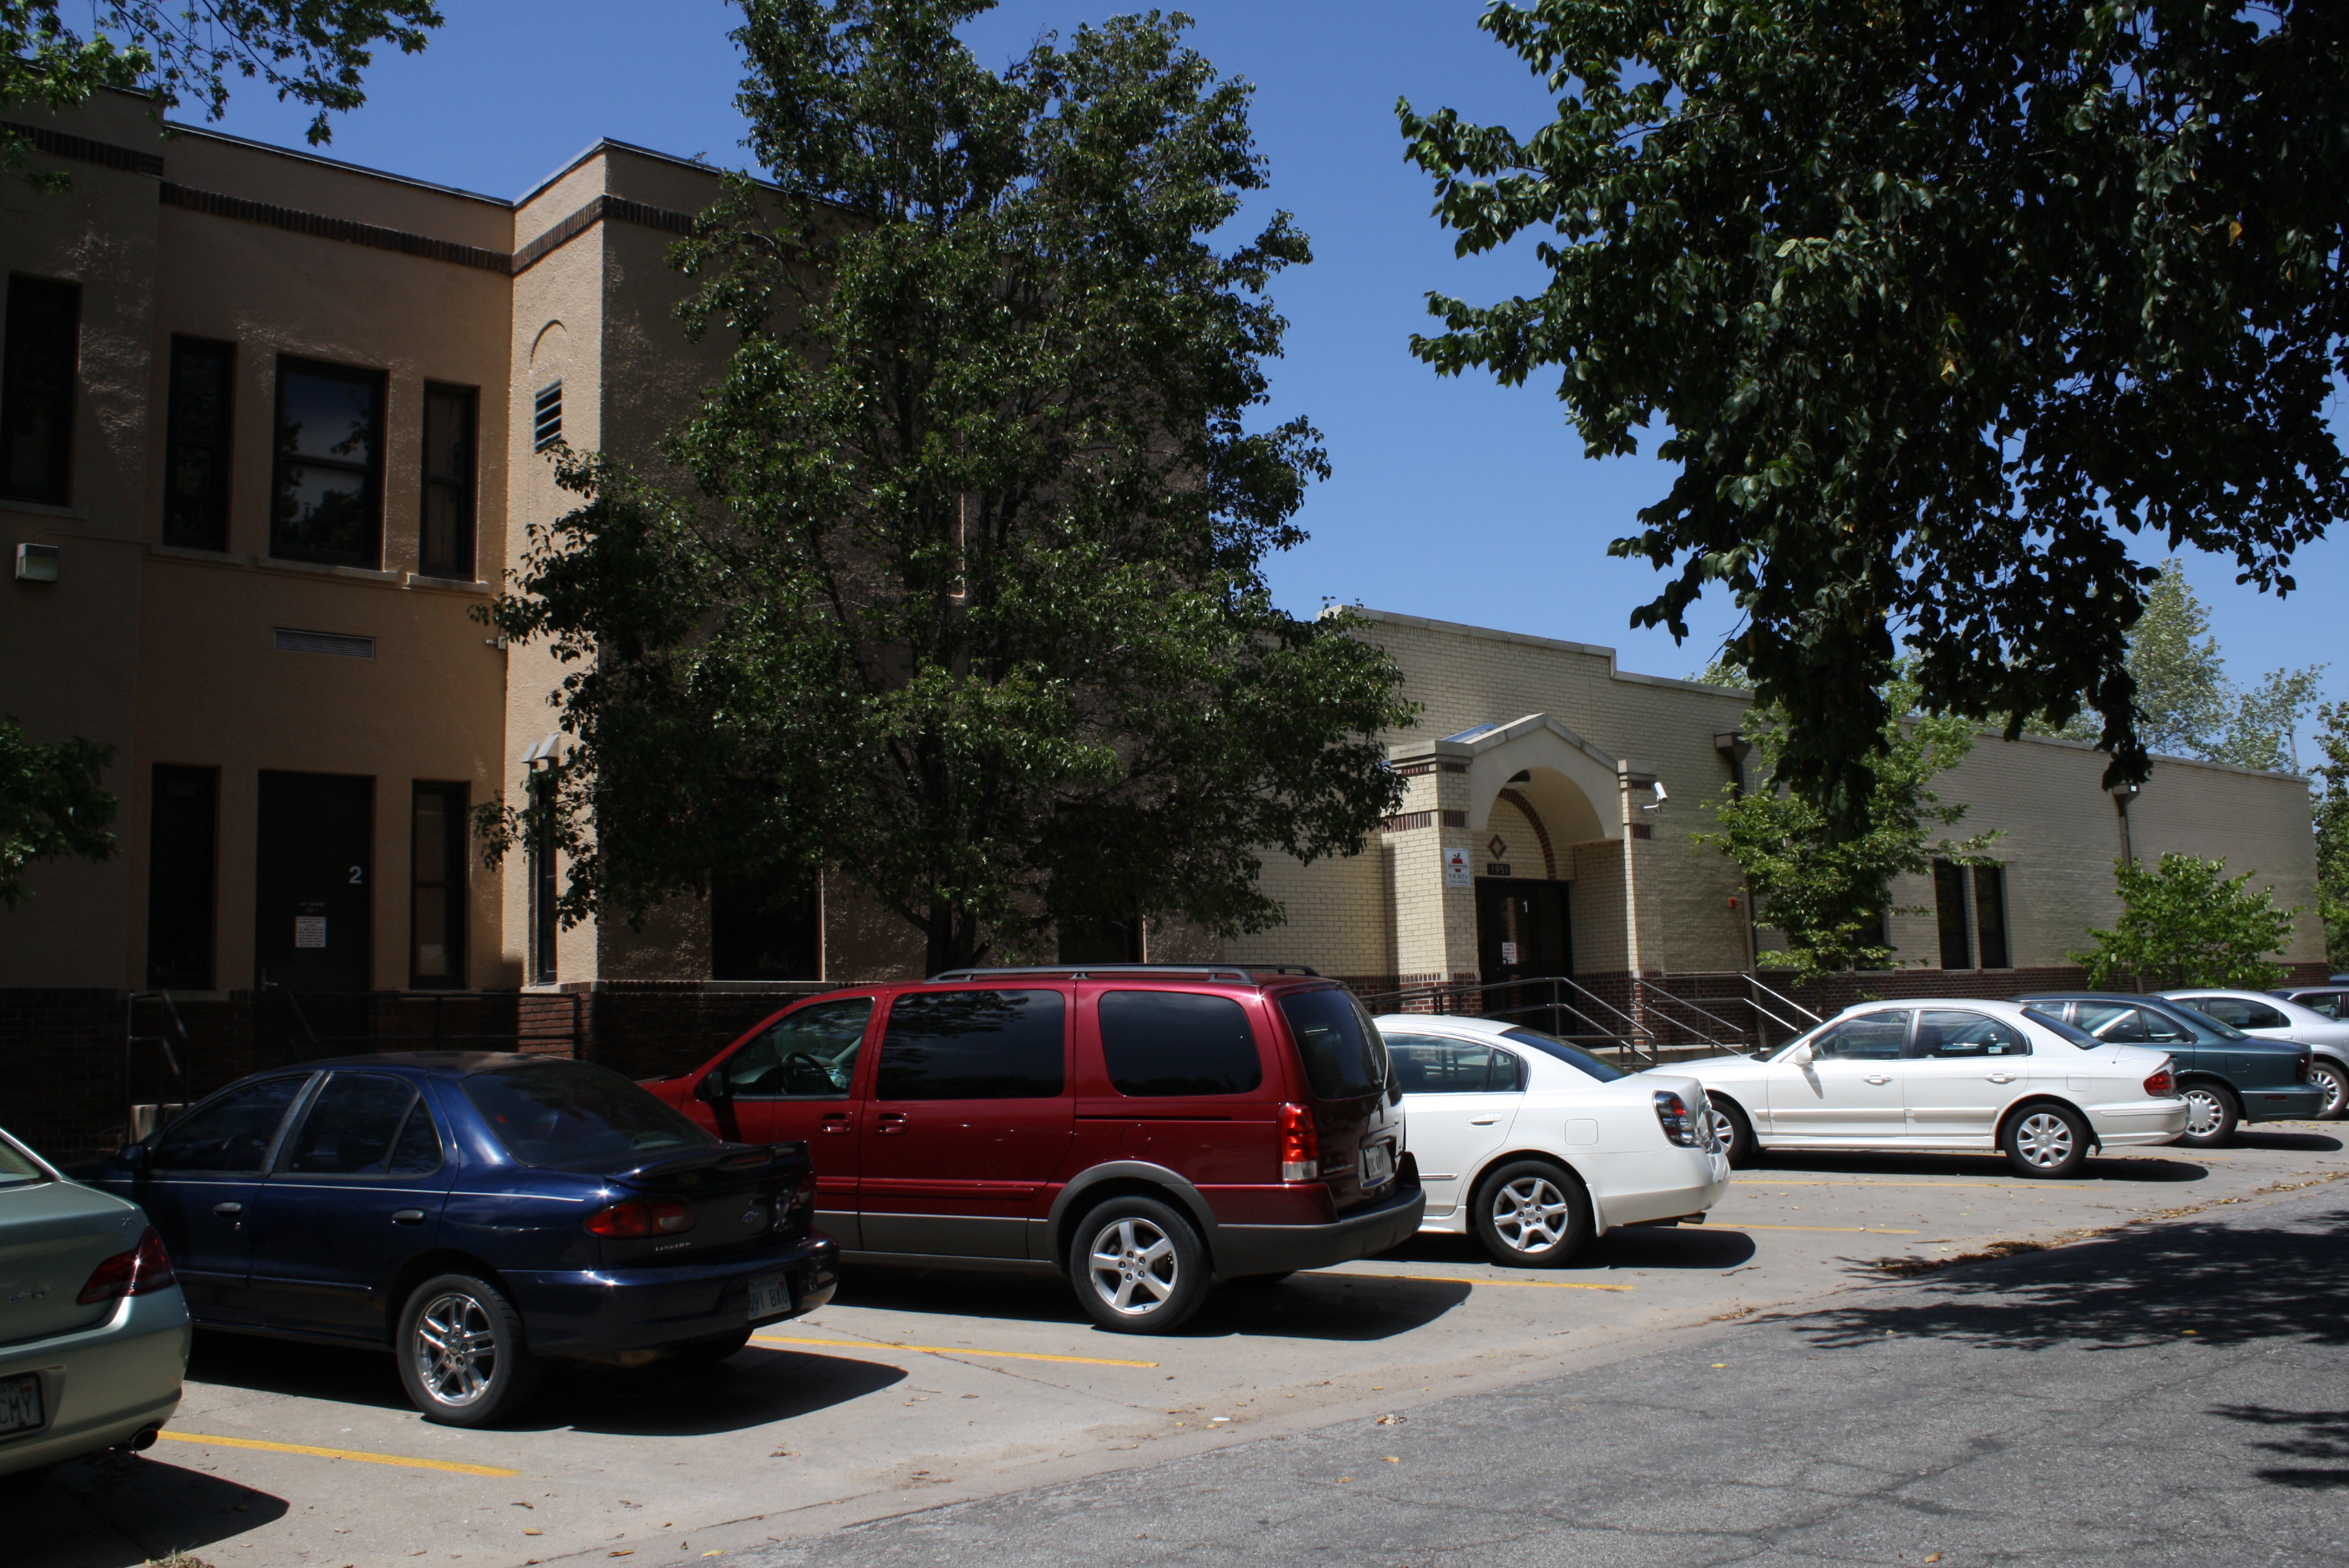 Image of the front of Gardiner Elementary School